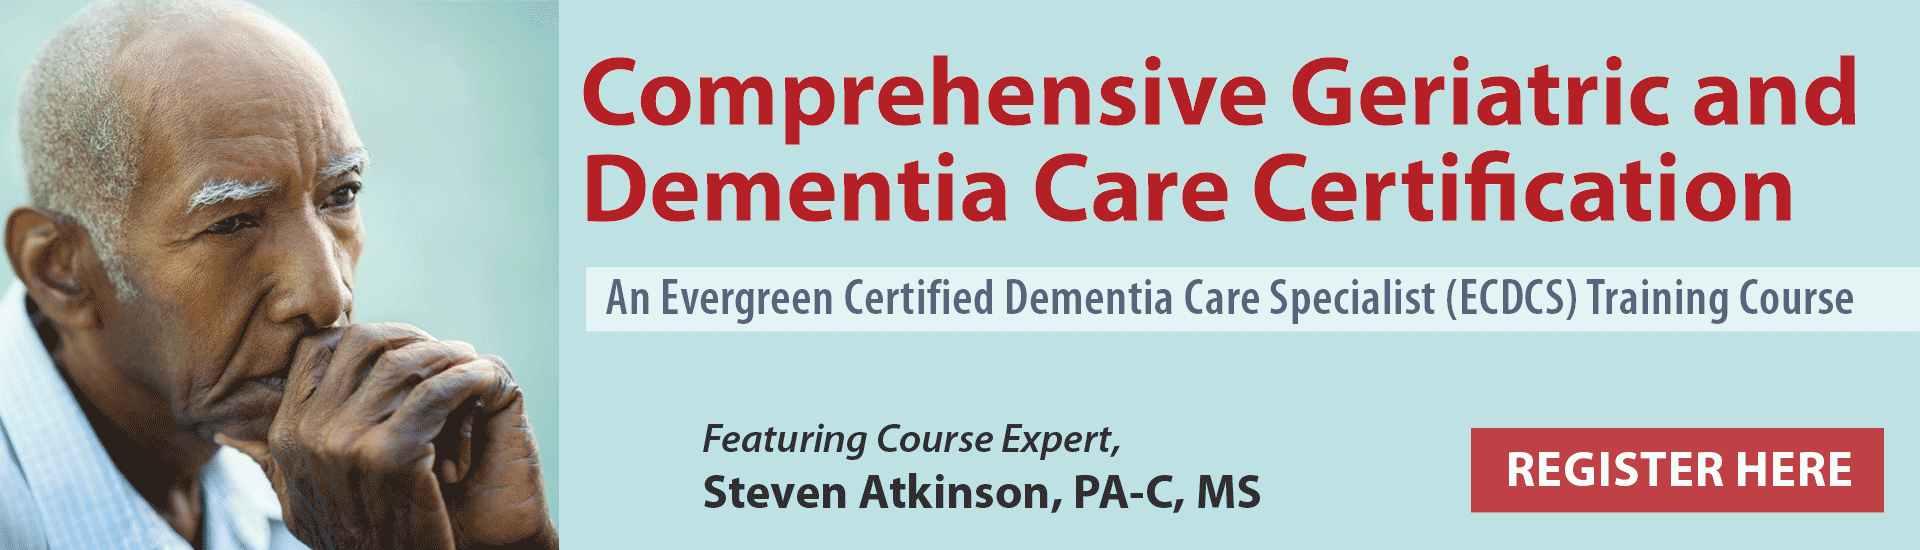 Comprehensive Geriatric and Dementia Care Certification